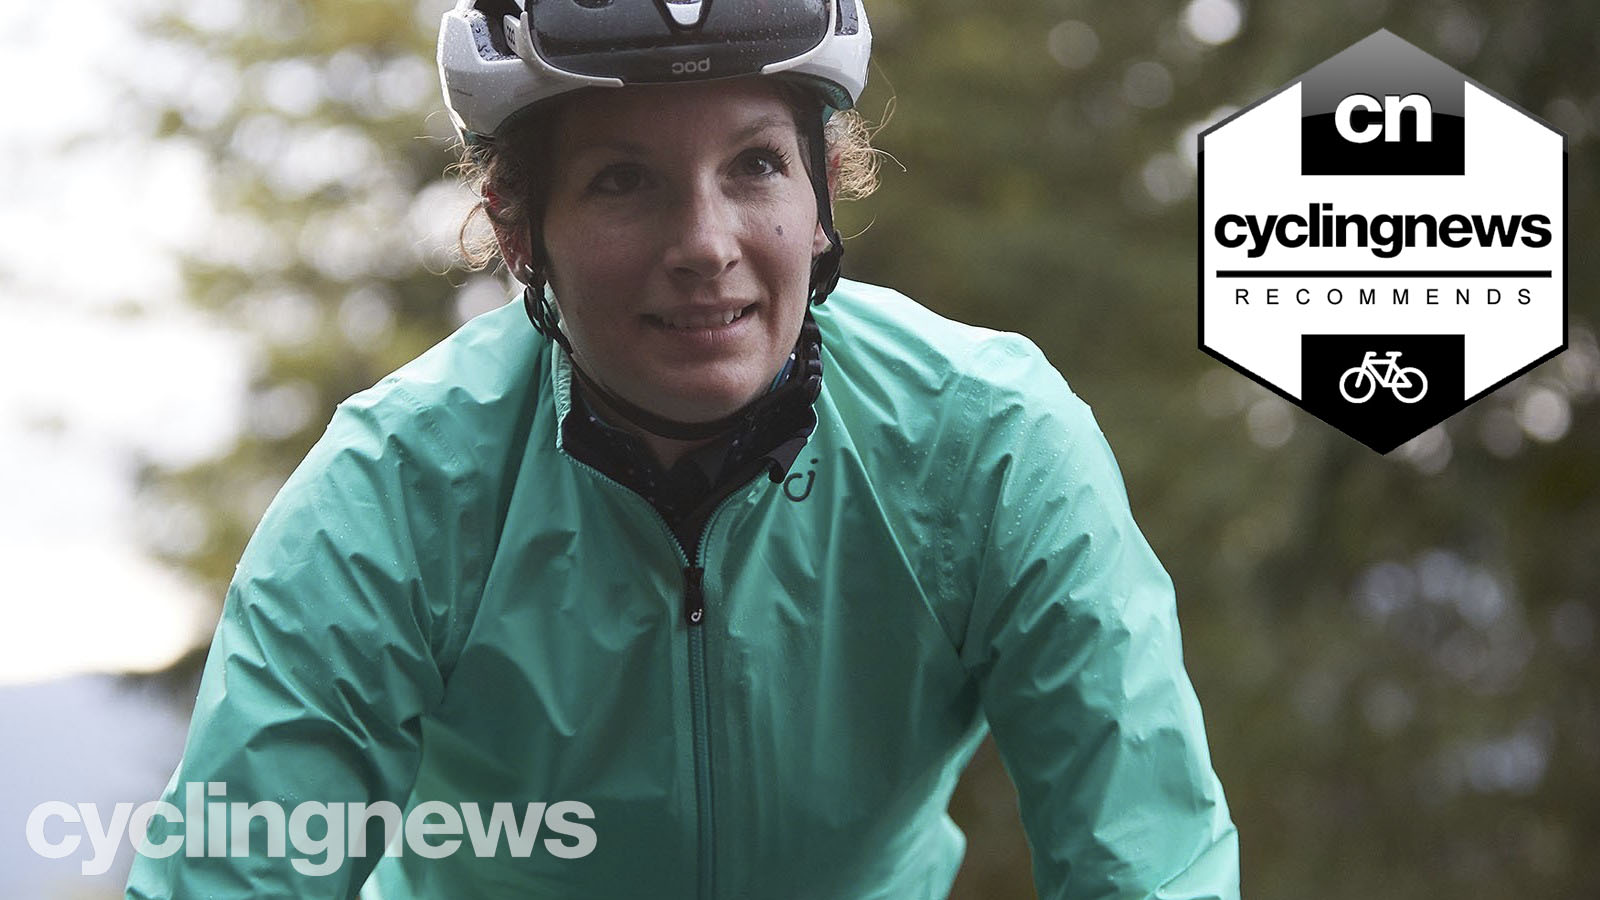 Ladies Cycling Rain Jacket Woman Hi-Visibility Waterproof Running Top Coat New 